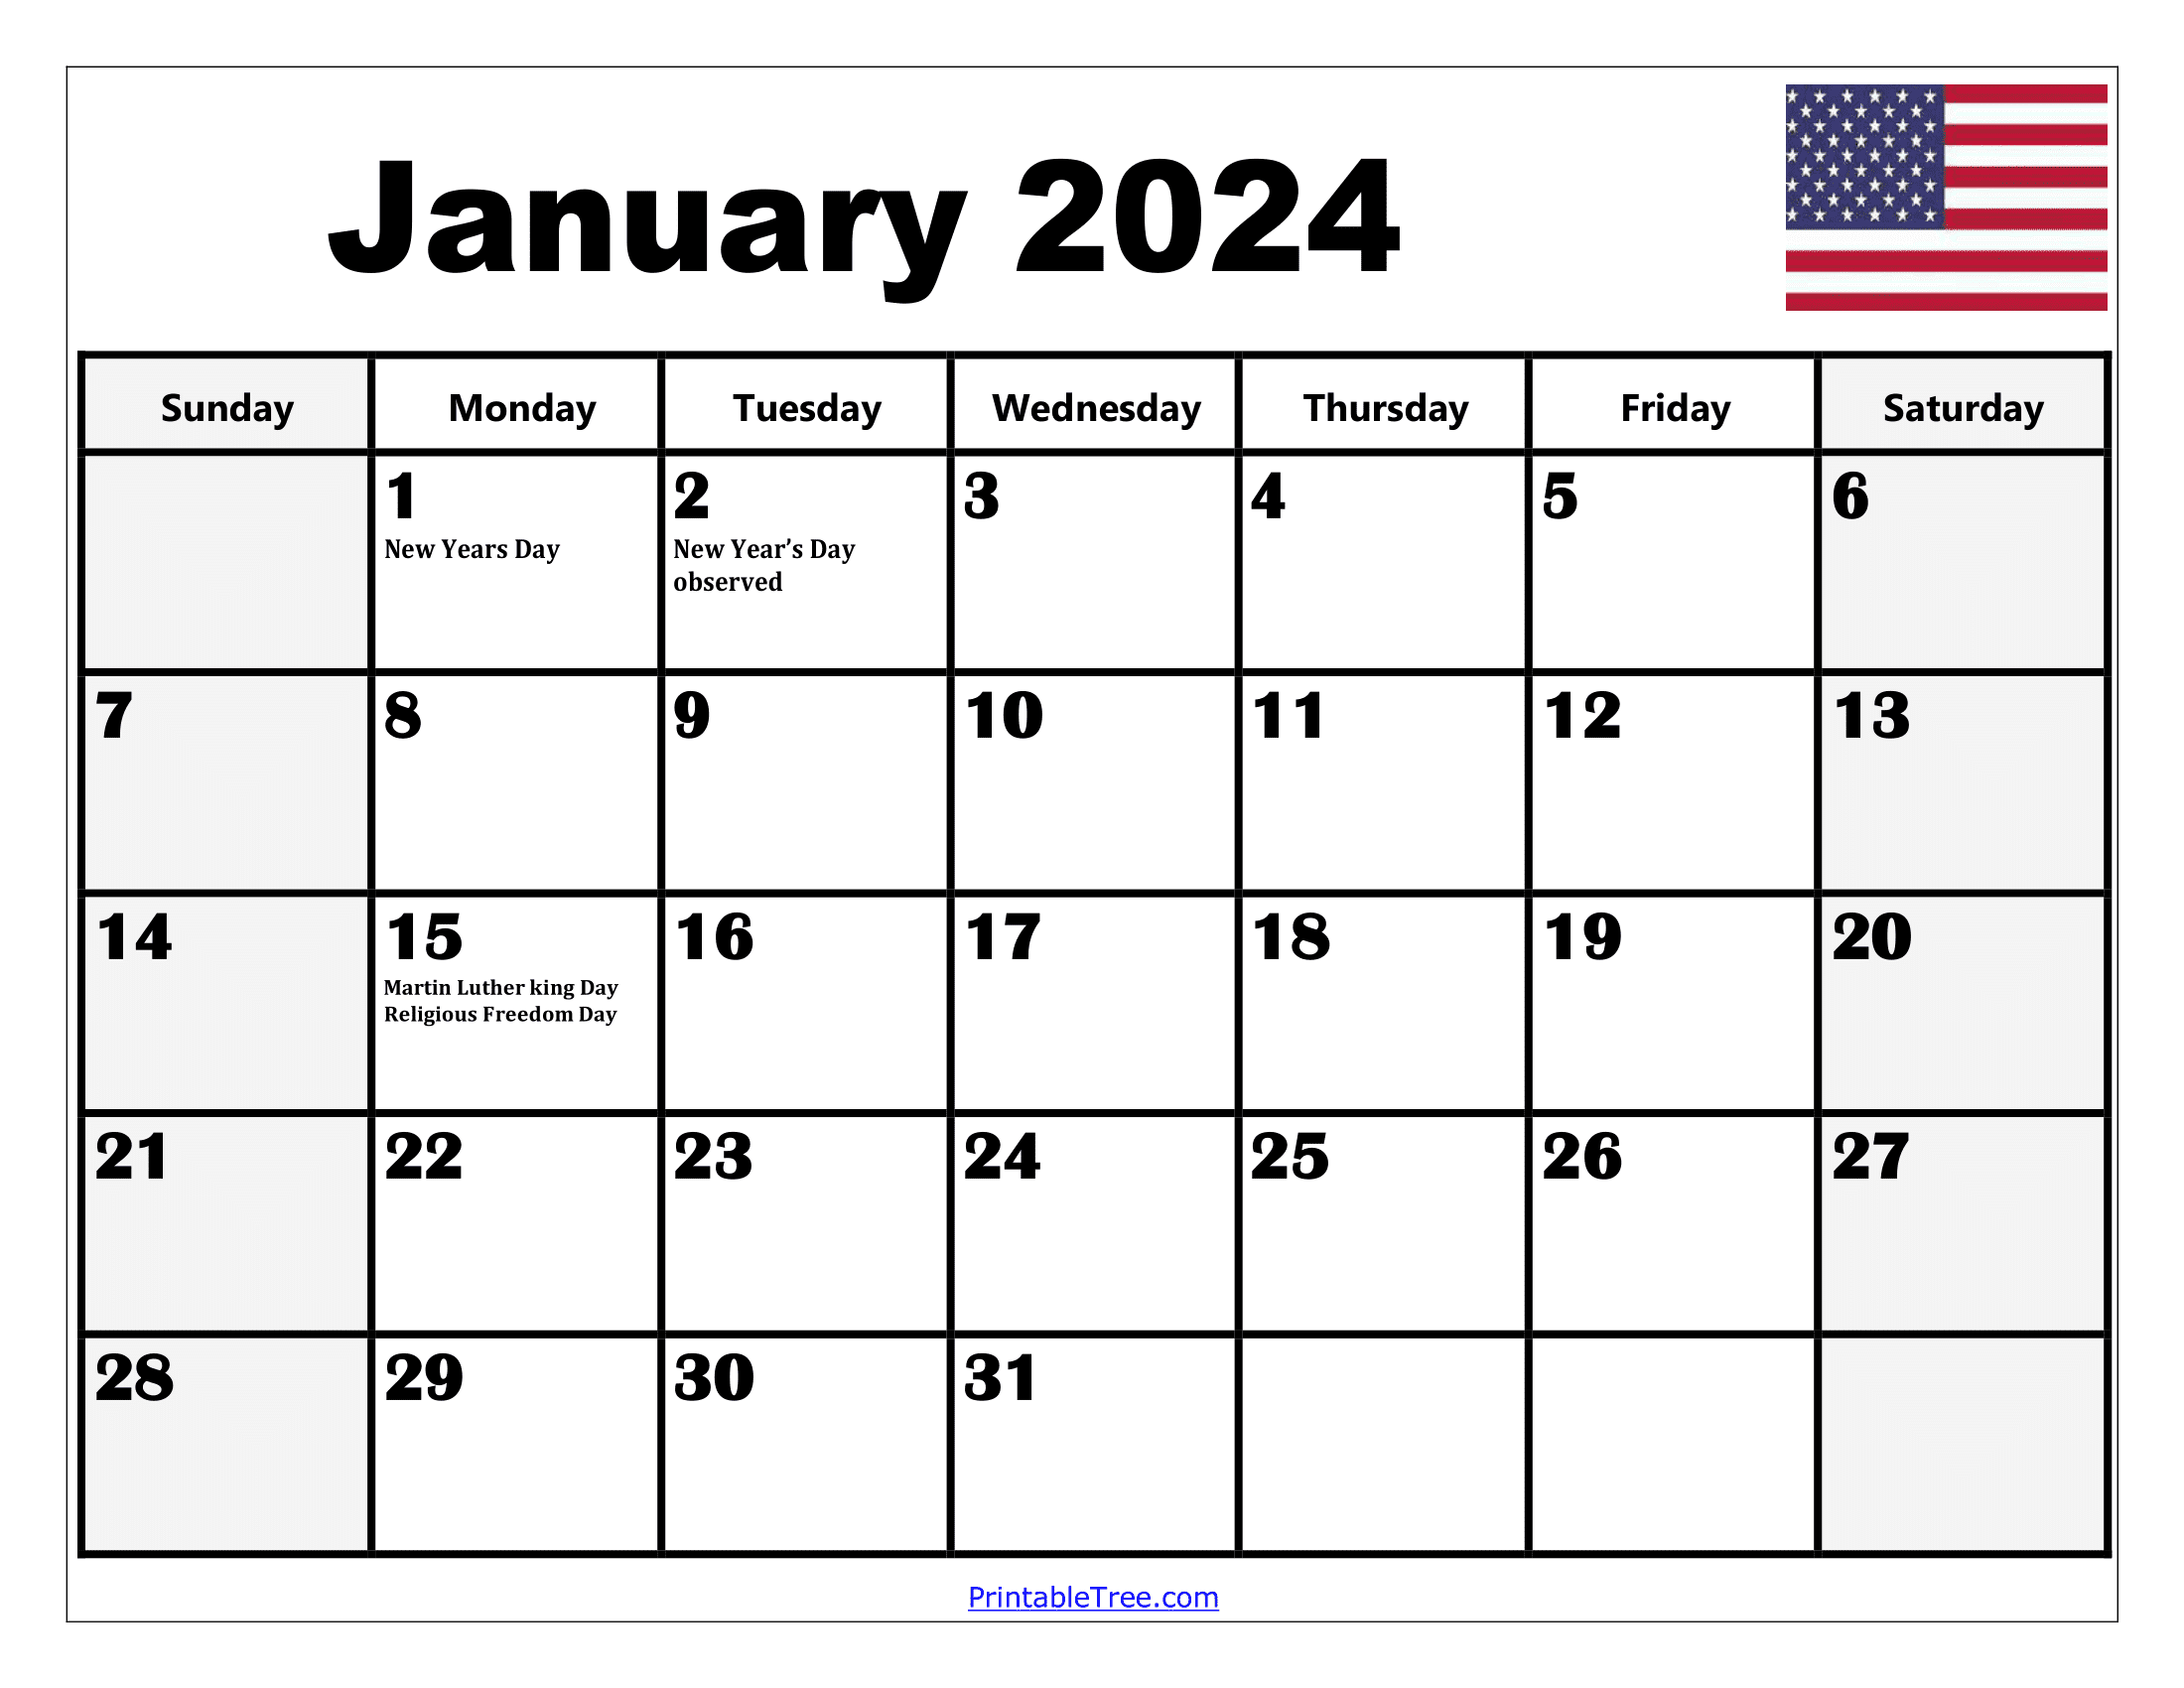 Calendar January 2024 With Holidays Printable February 2024 Calendar - Free Printable 2024 Calendar January